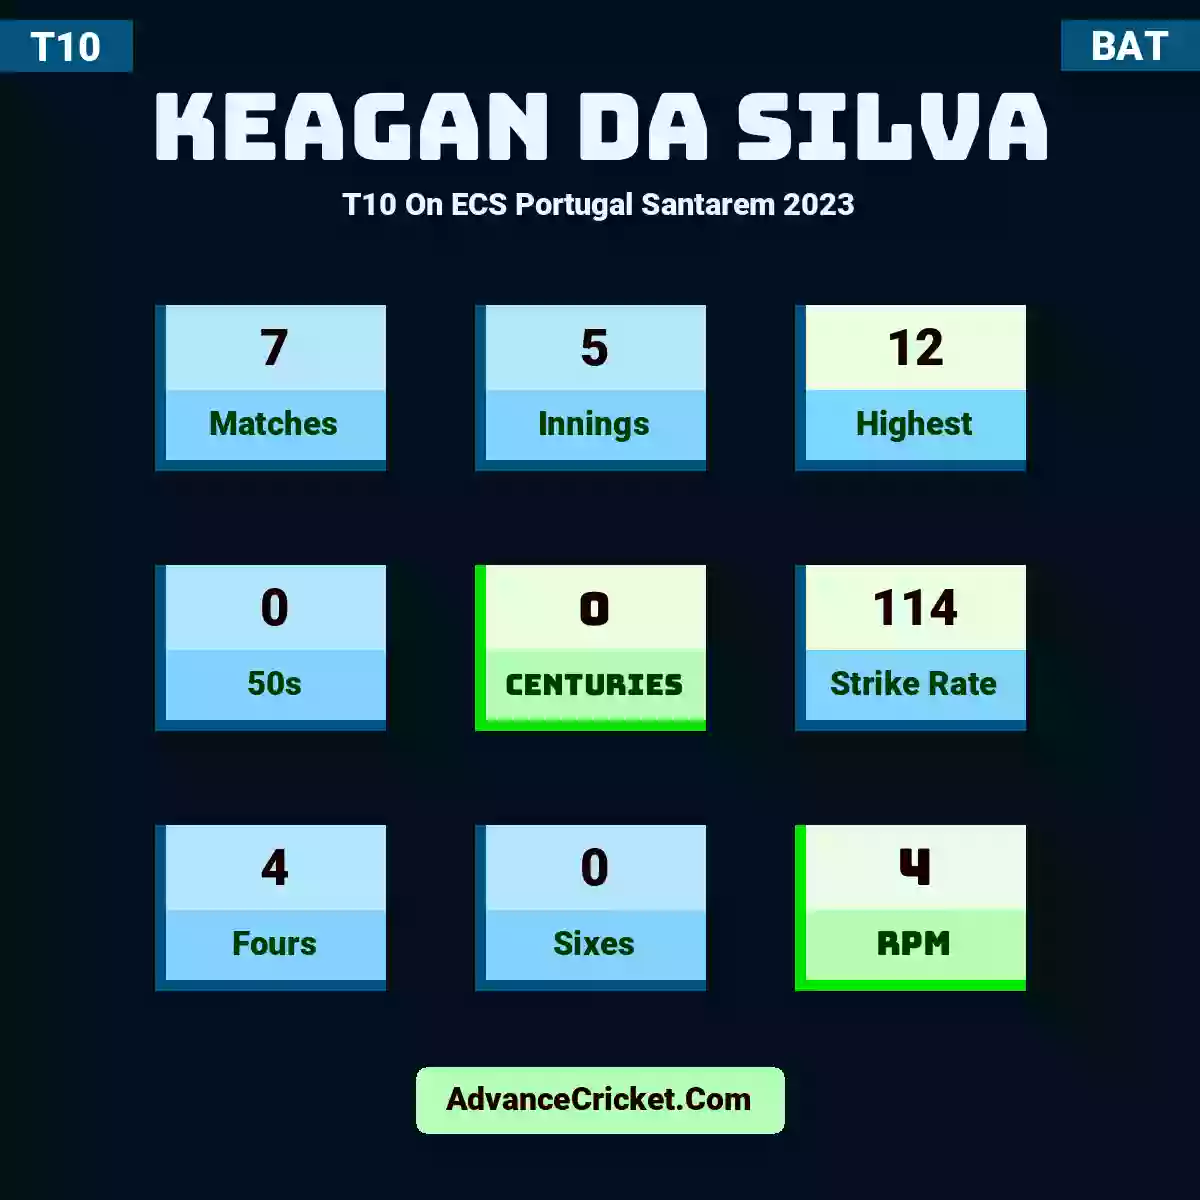 Keagan Da Silva T10  On ECS Portugal Santarem 2023, Keagan Da Silva played 7 matches, scored 12 runs as highest, 0 half-centuries, and 0 centuries, with a strike rate of 114. K.Da.Silva hit 4 fours and 0 sixes, with an RPM of 4.